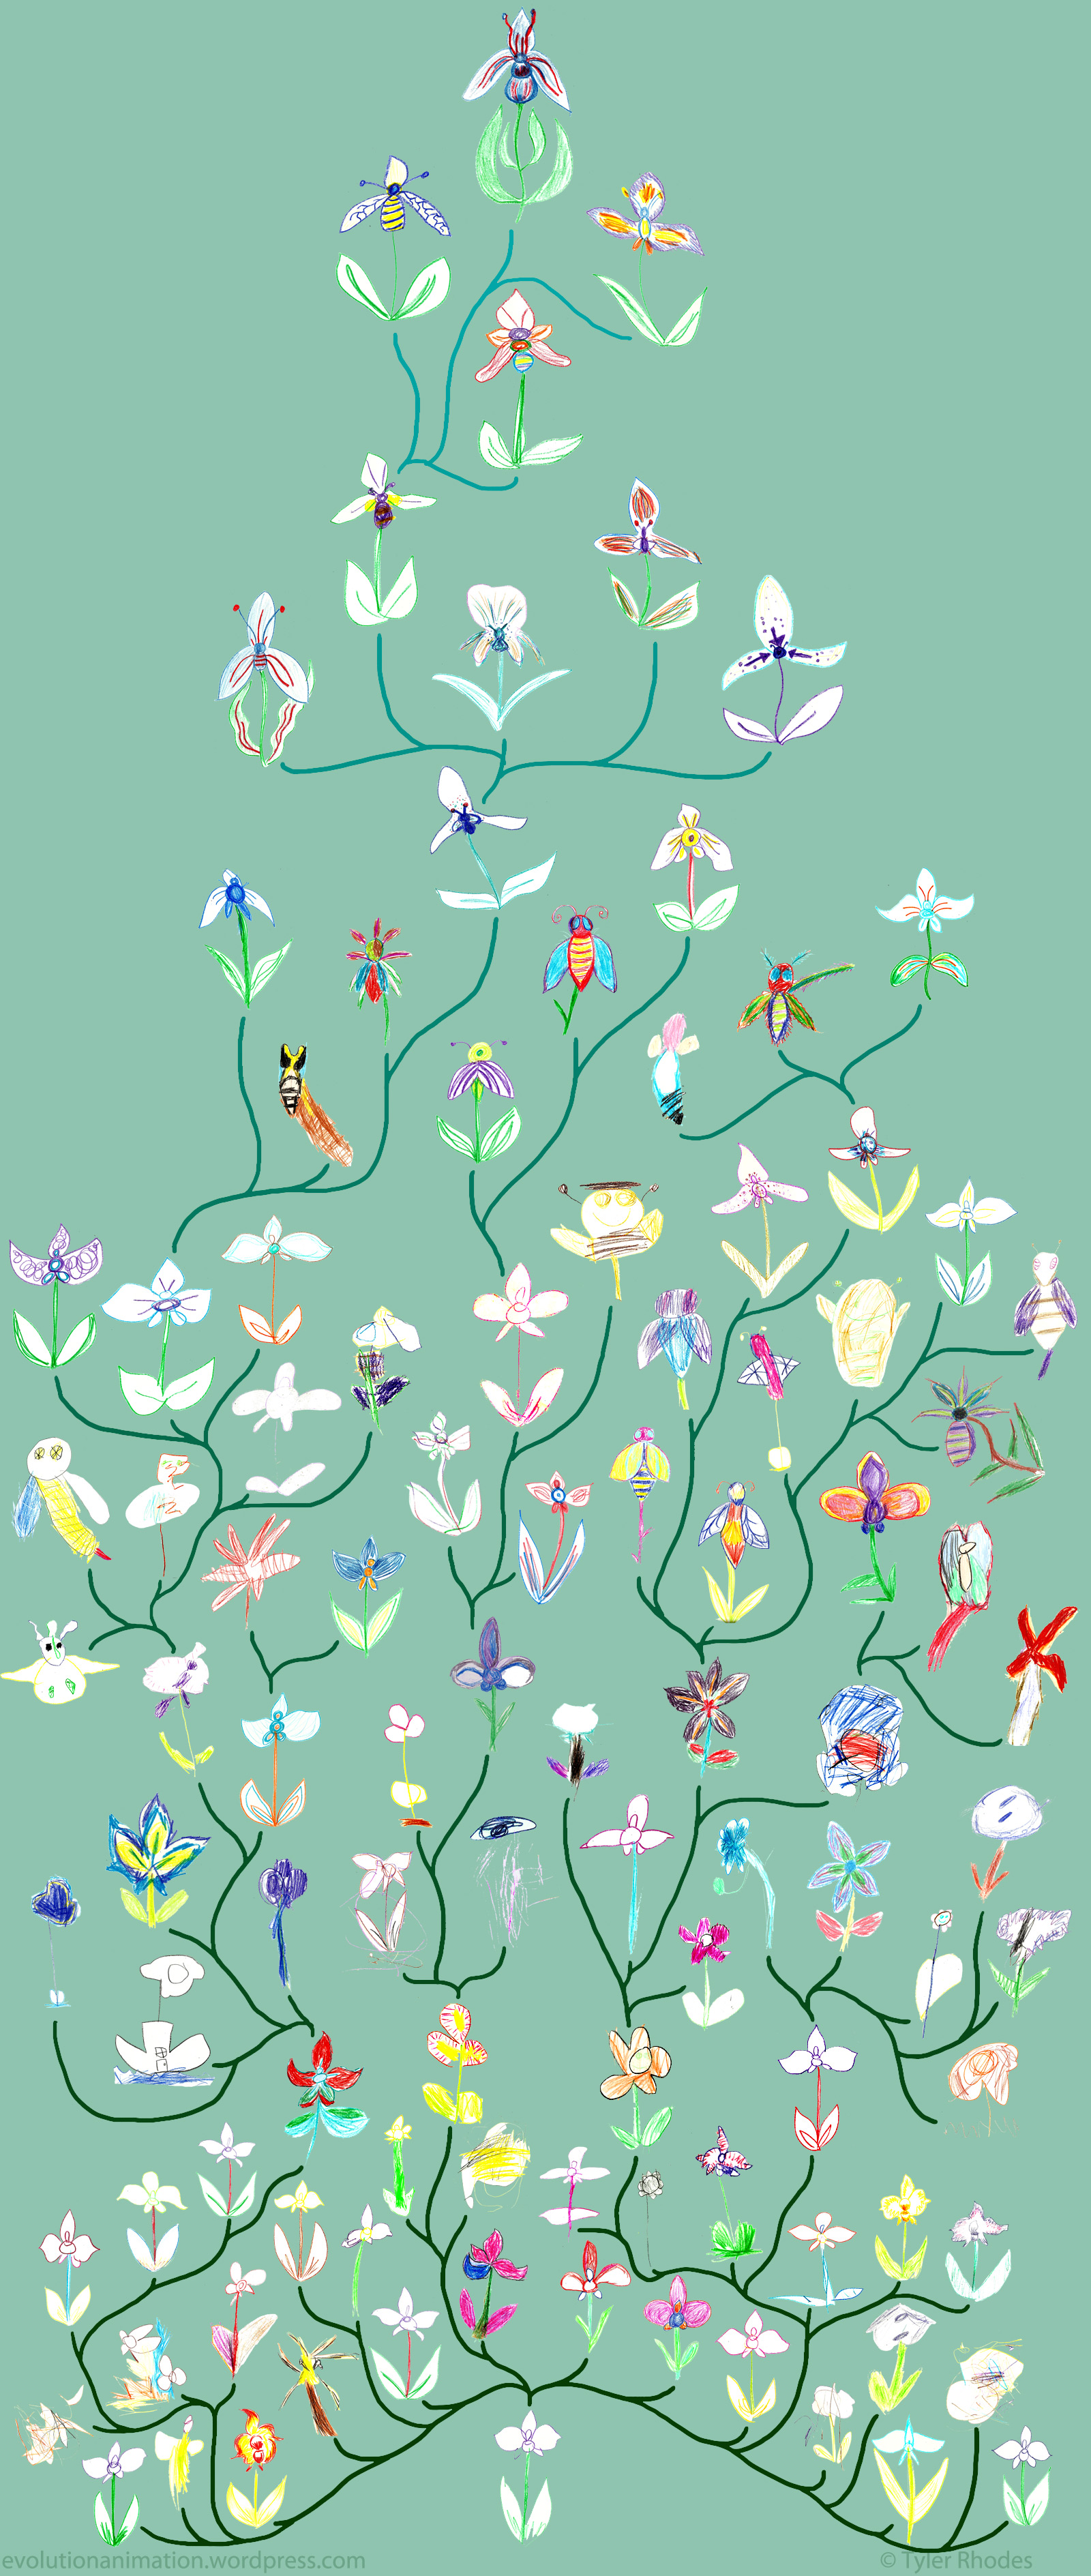 tyler-rhodes-lewis-ginter-botanical-gardens-orchid-evolution-tree.jpg